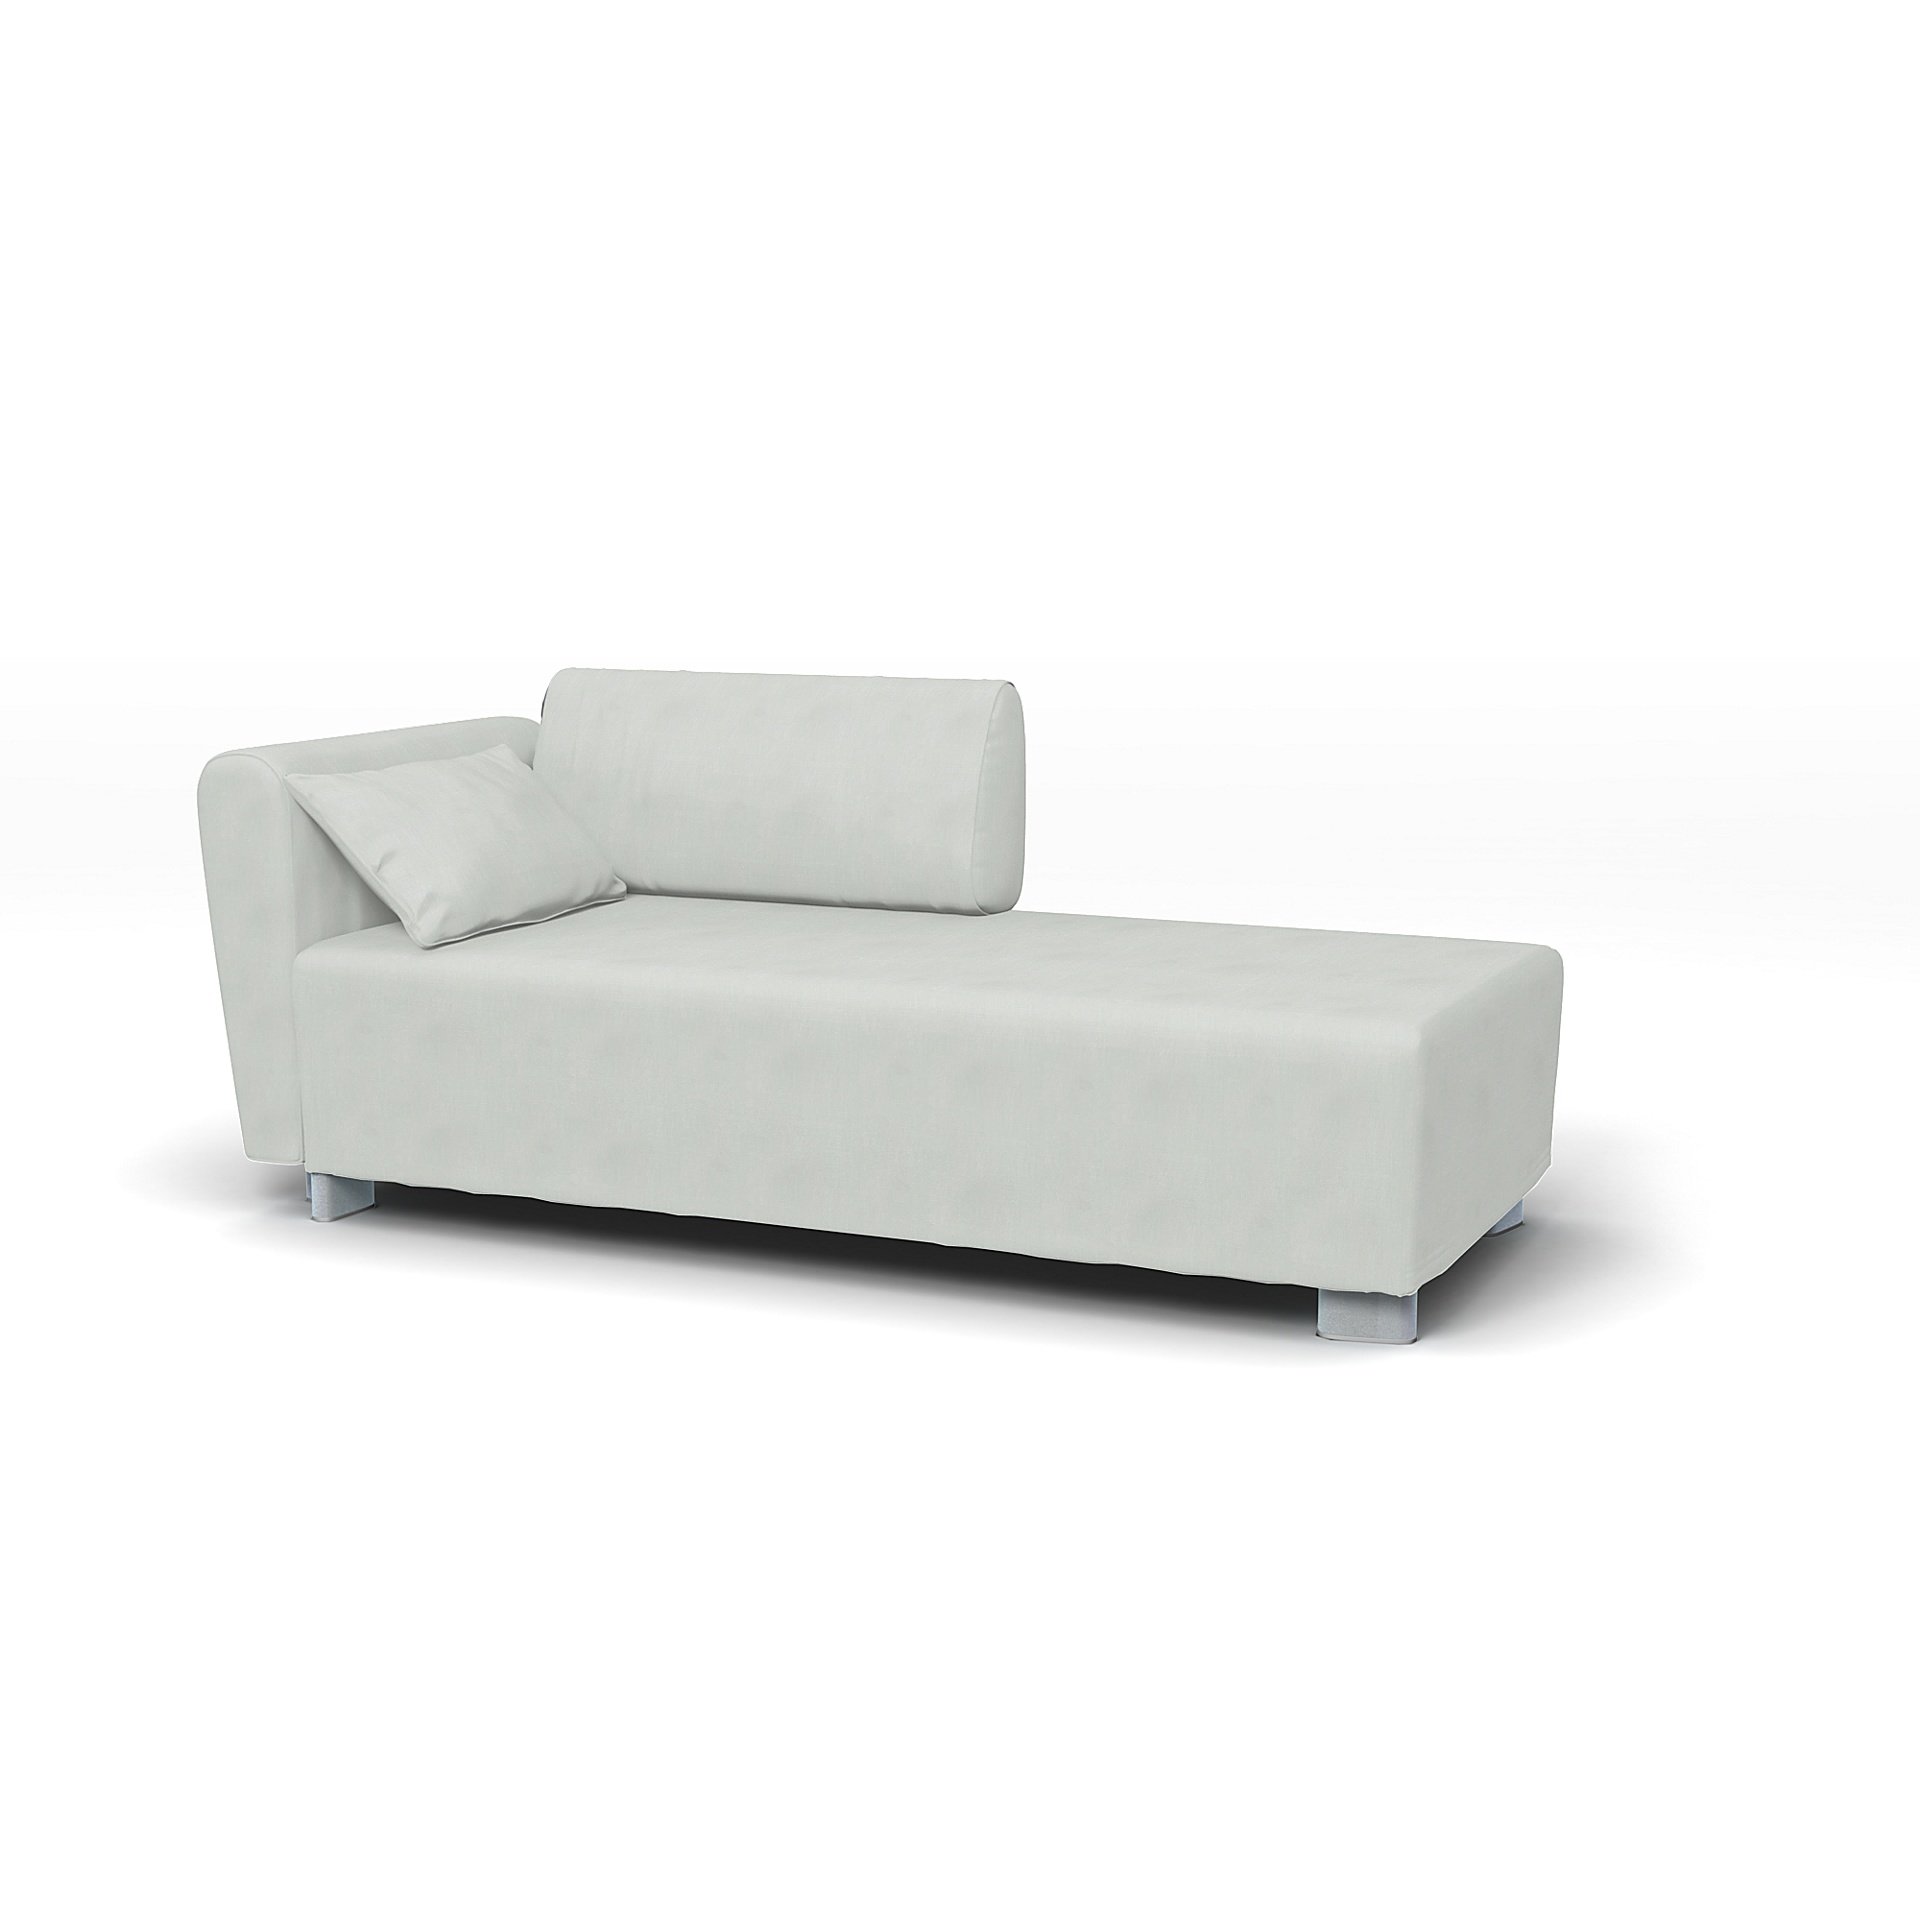 IKEA - Mysinge Chaise Longue with Armrest Cover, Silver Grey, Linen - Bemz